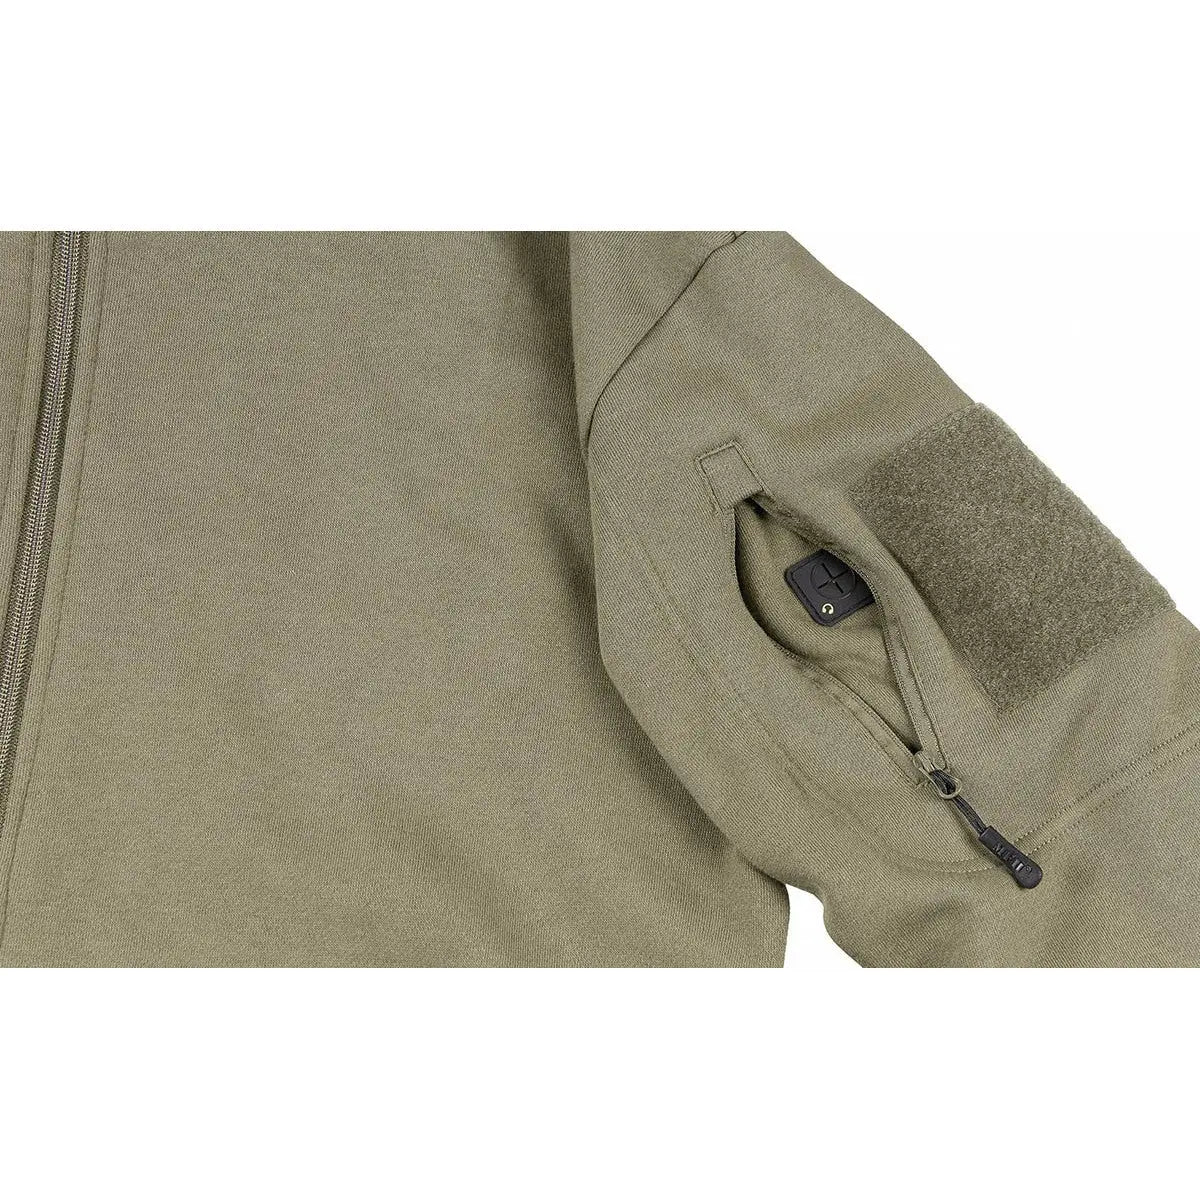 Sweatjacket, "Tactical", OD green NSO Gear